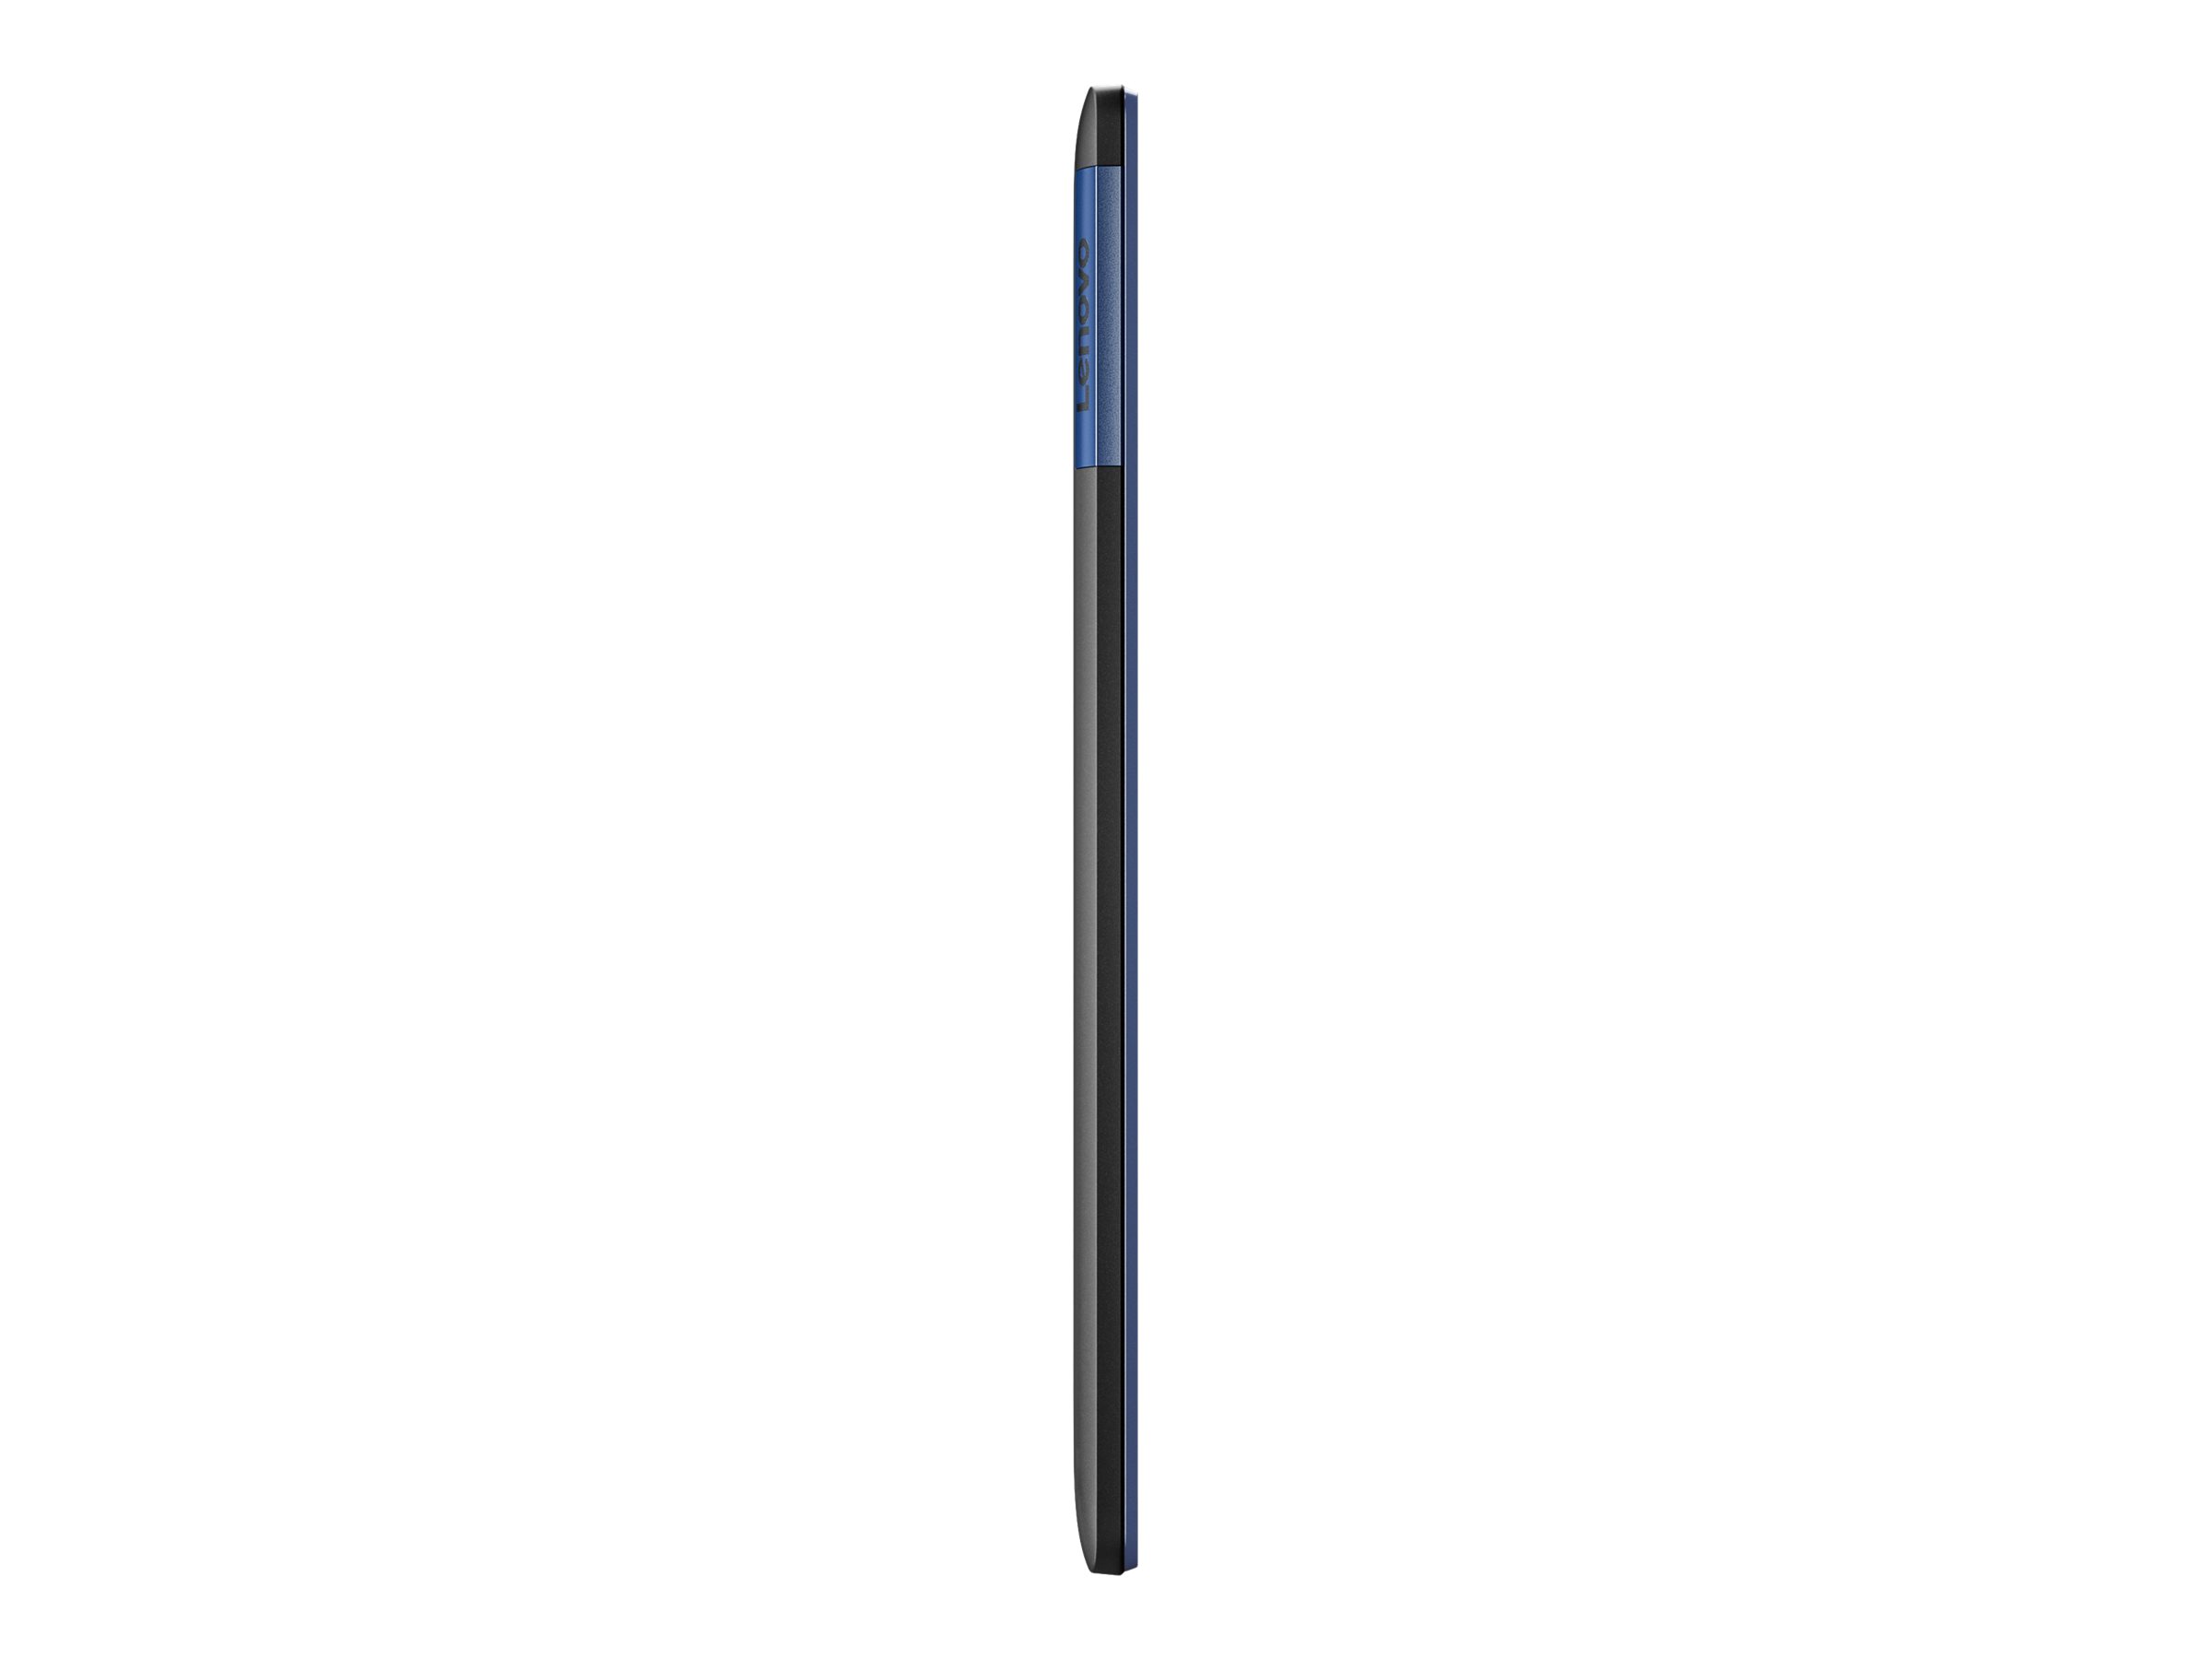 Lenovo TB3-850F ZA17 - tablette - Android 6.0 (Marshmallow) - 16 Go - 8